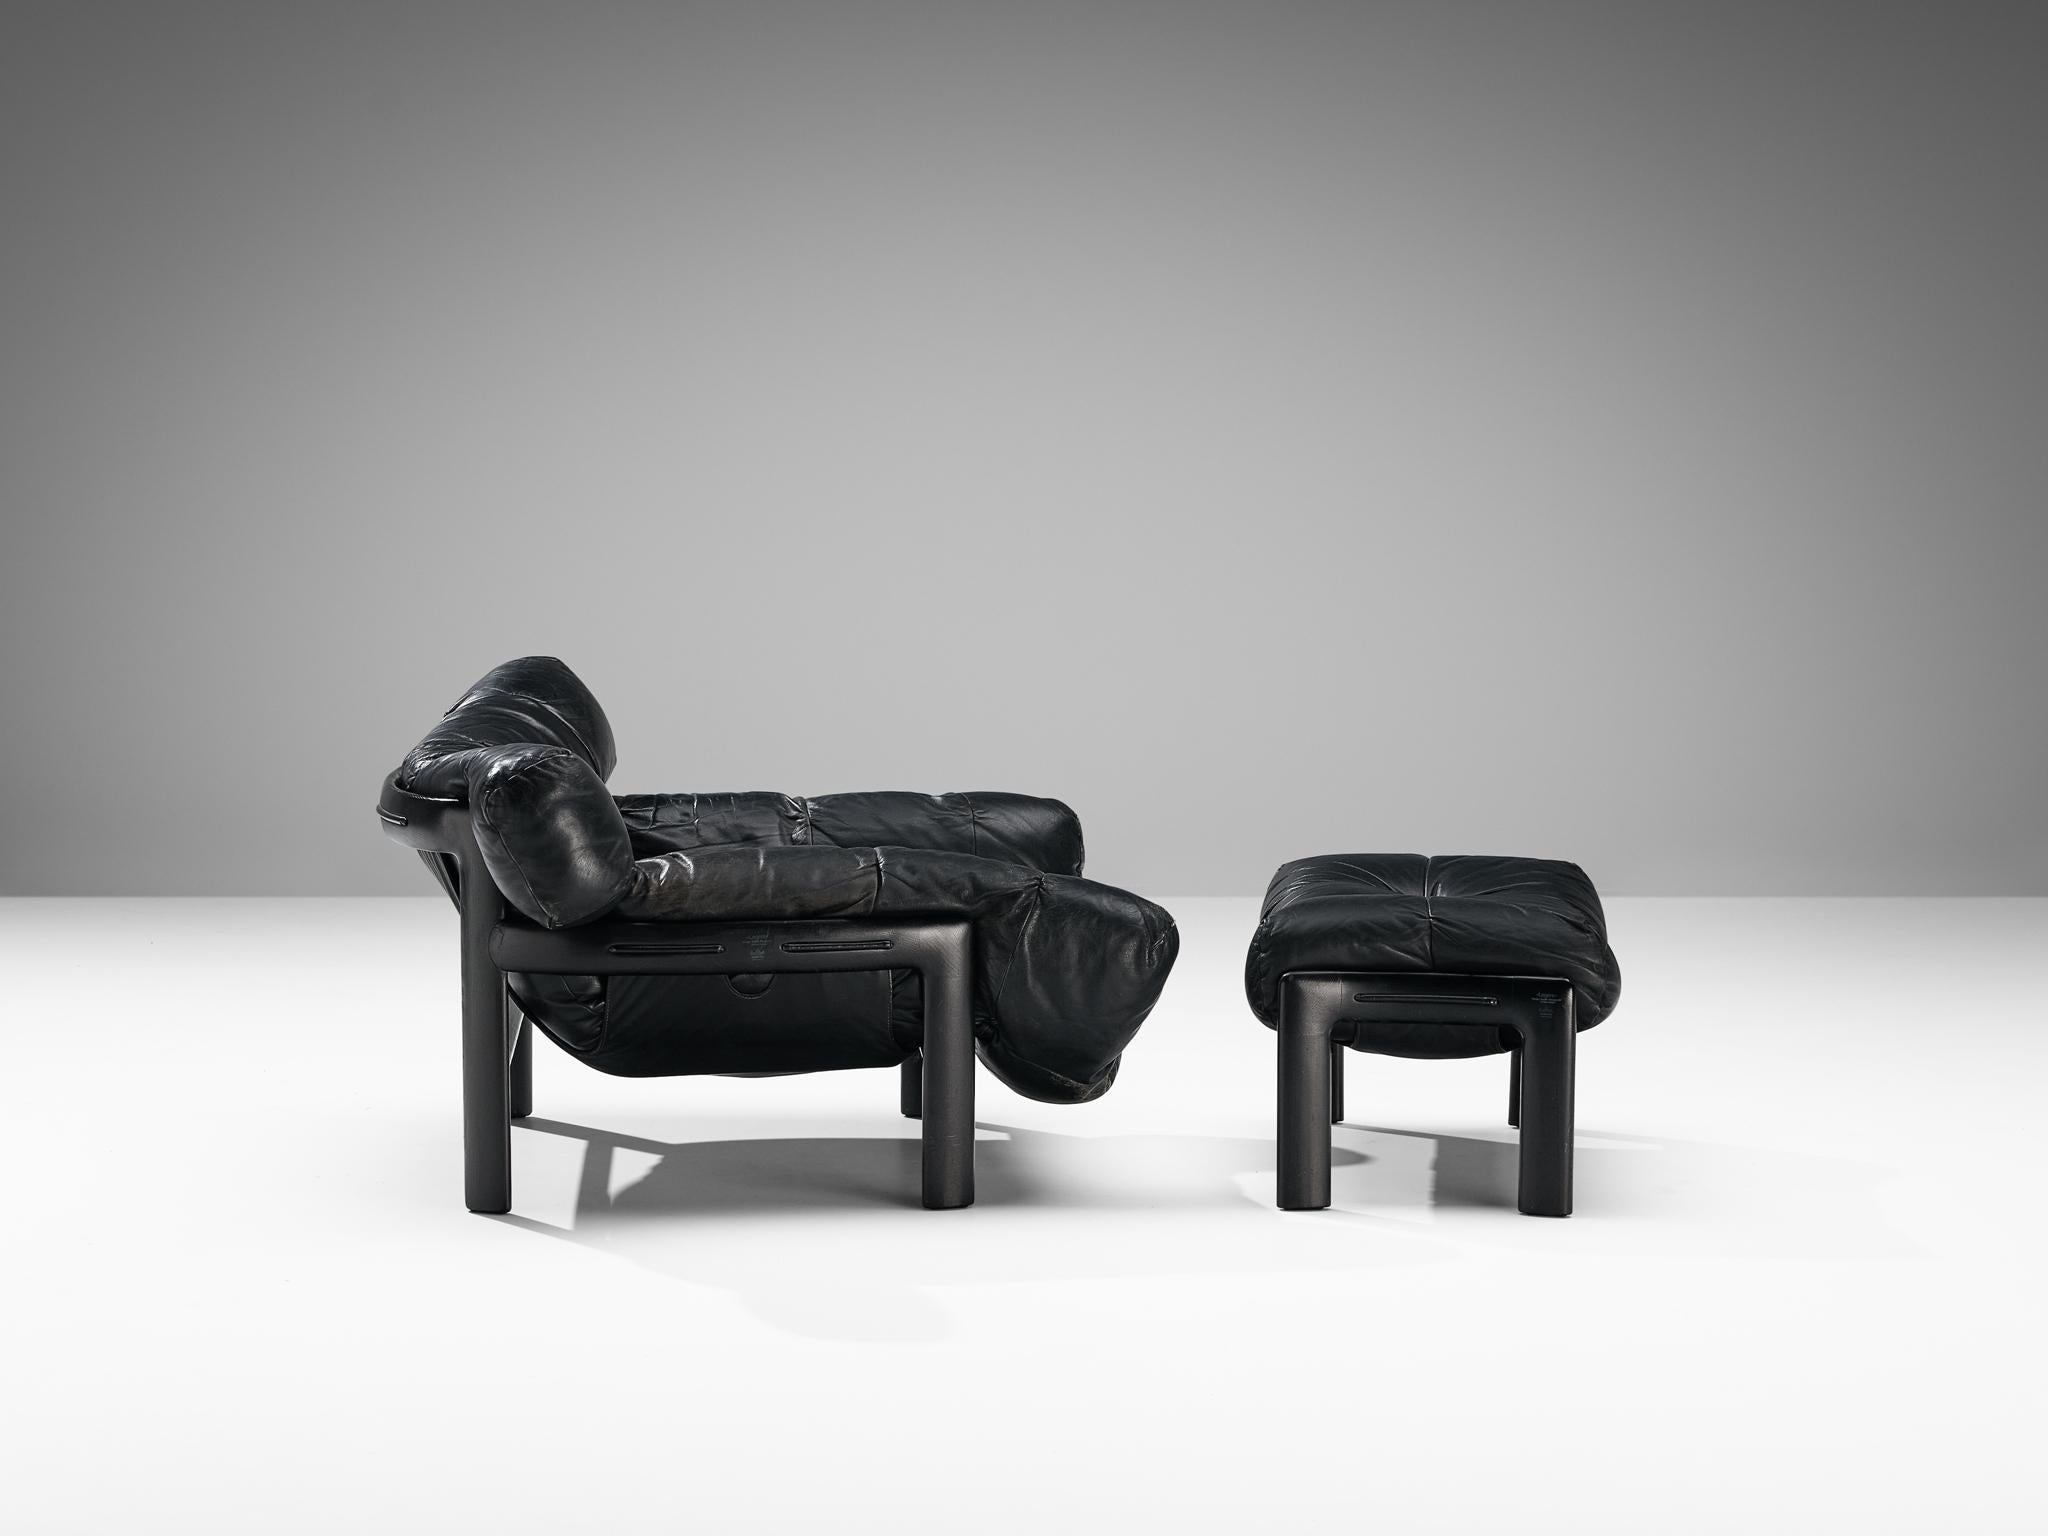 Leather Angelo Mangiarotti & Chiara Pampo 'Légère' Lounge Chair with Ottoman